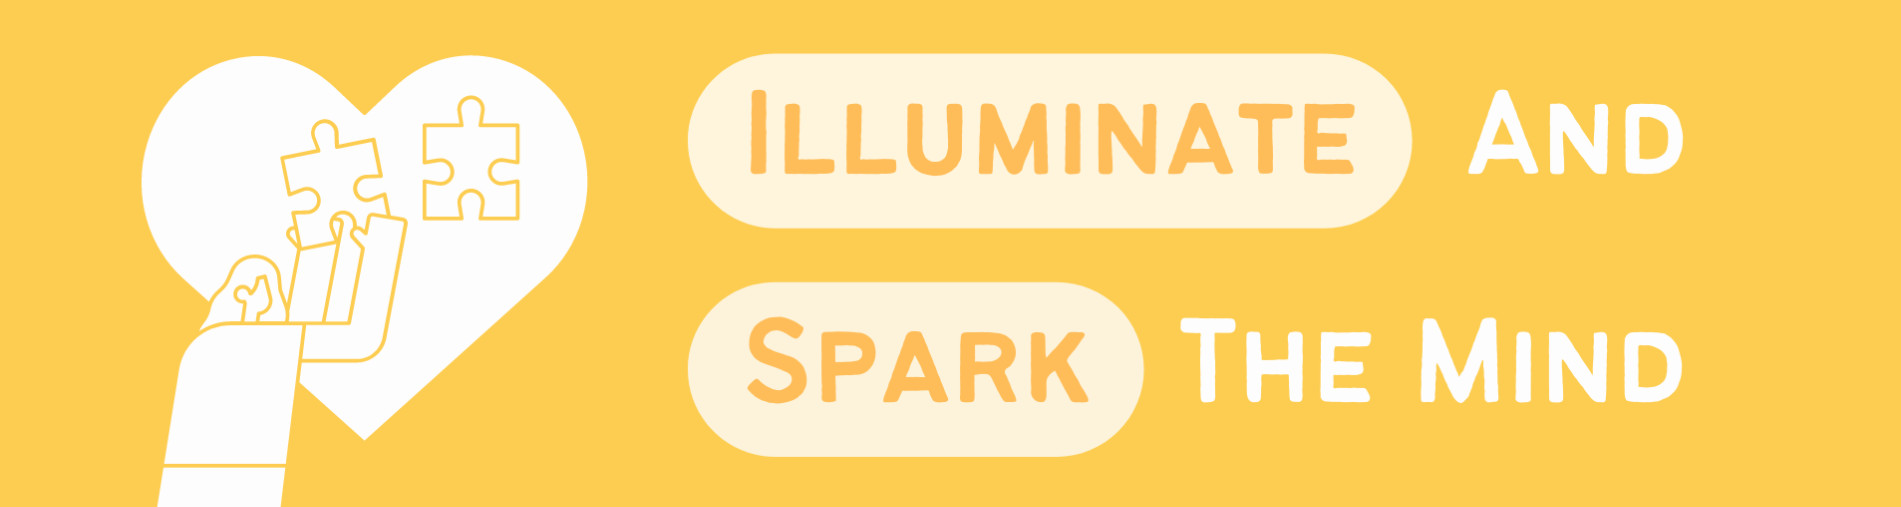 Illuminate and Spark the Mind